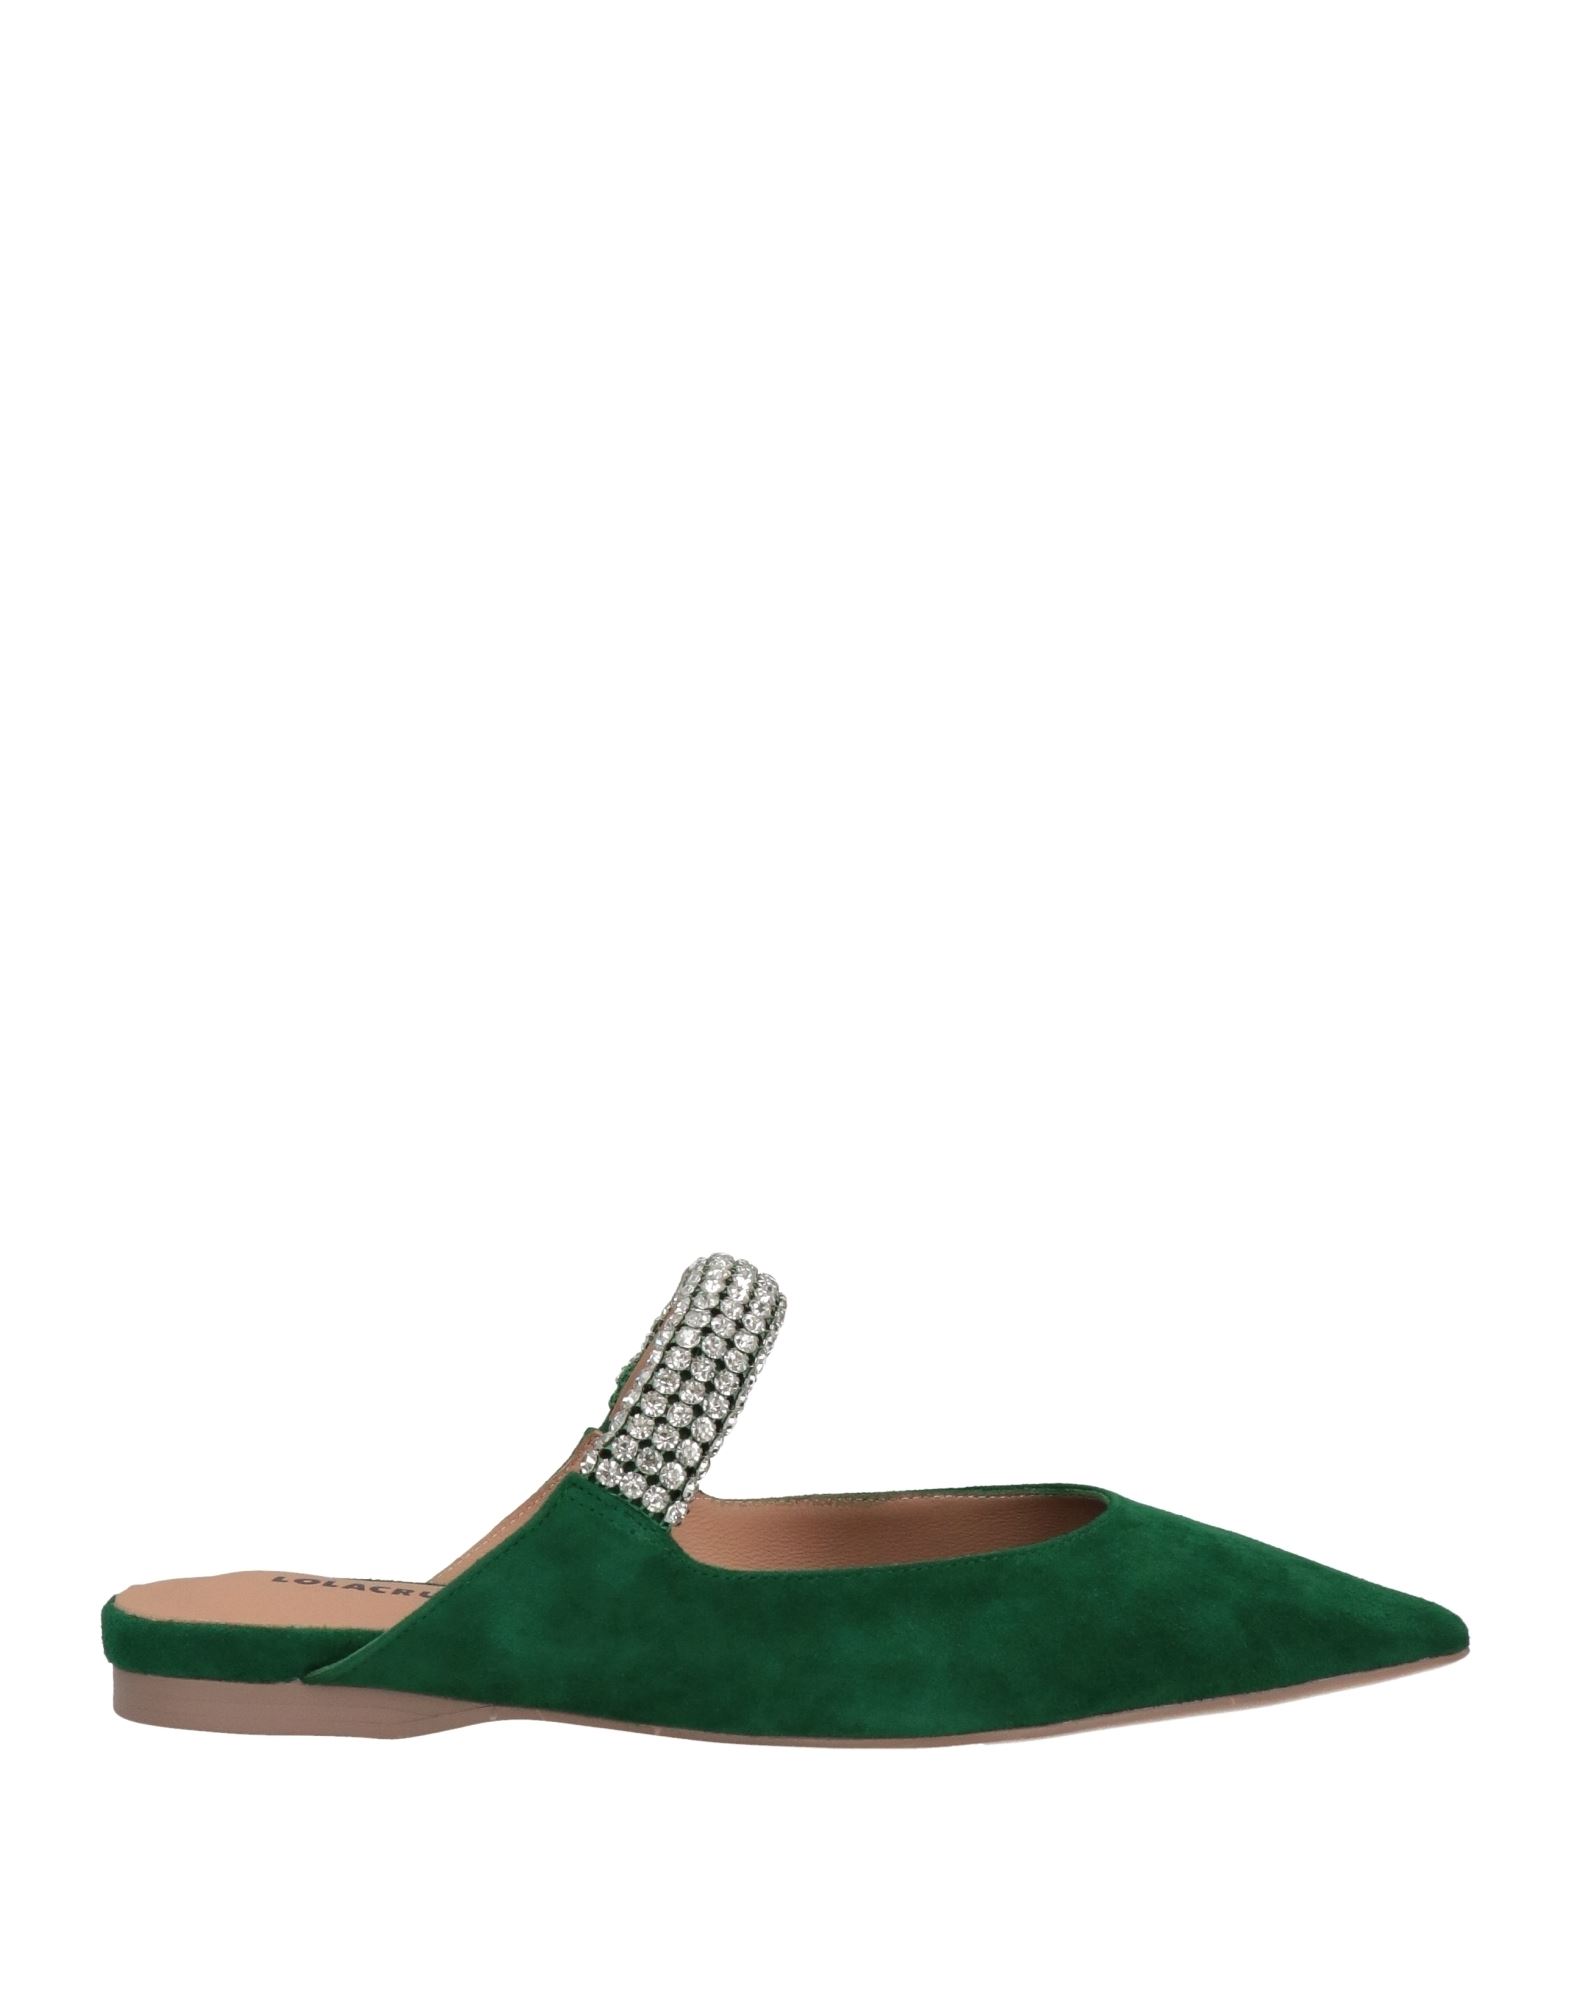 Lola Cruz Woman Mules & Clogs Green Size 8 Soft Leather